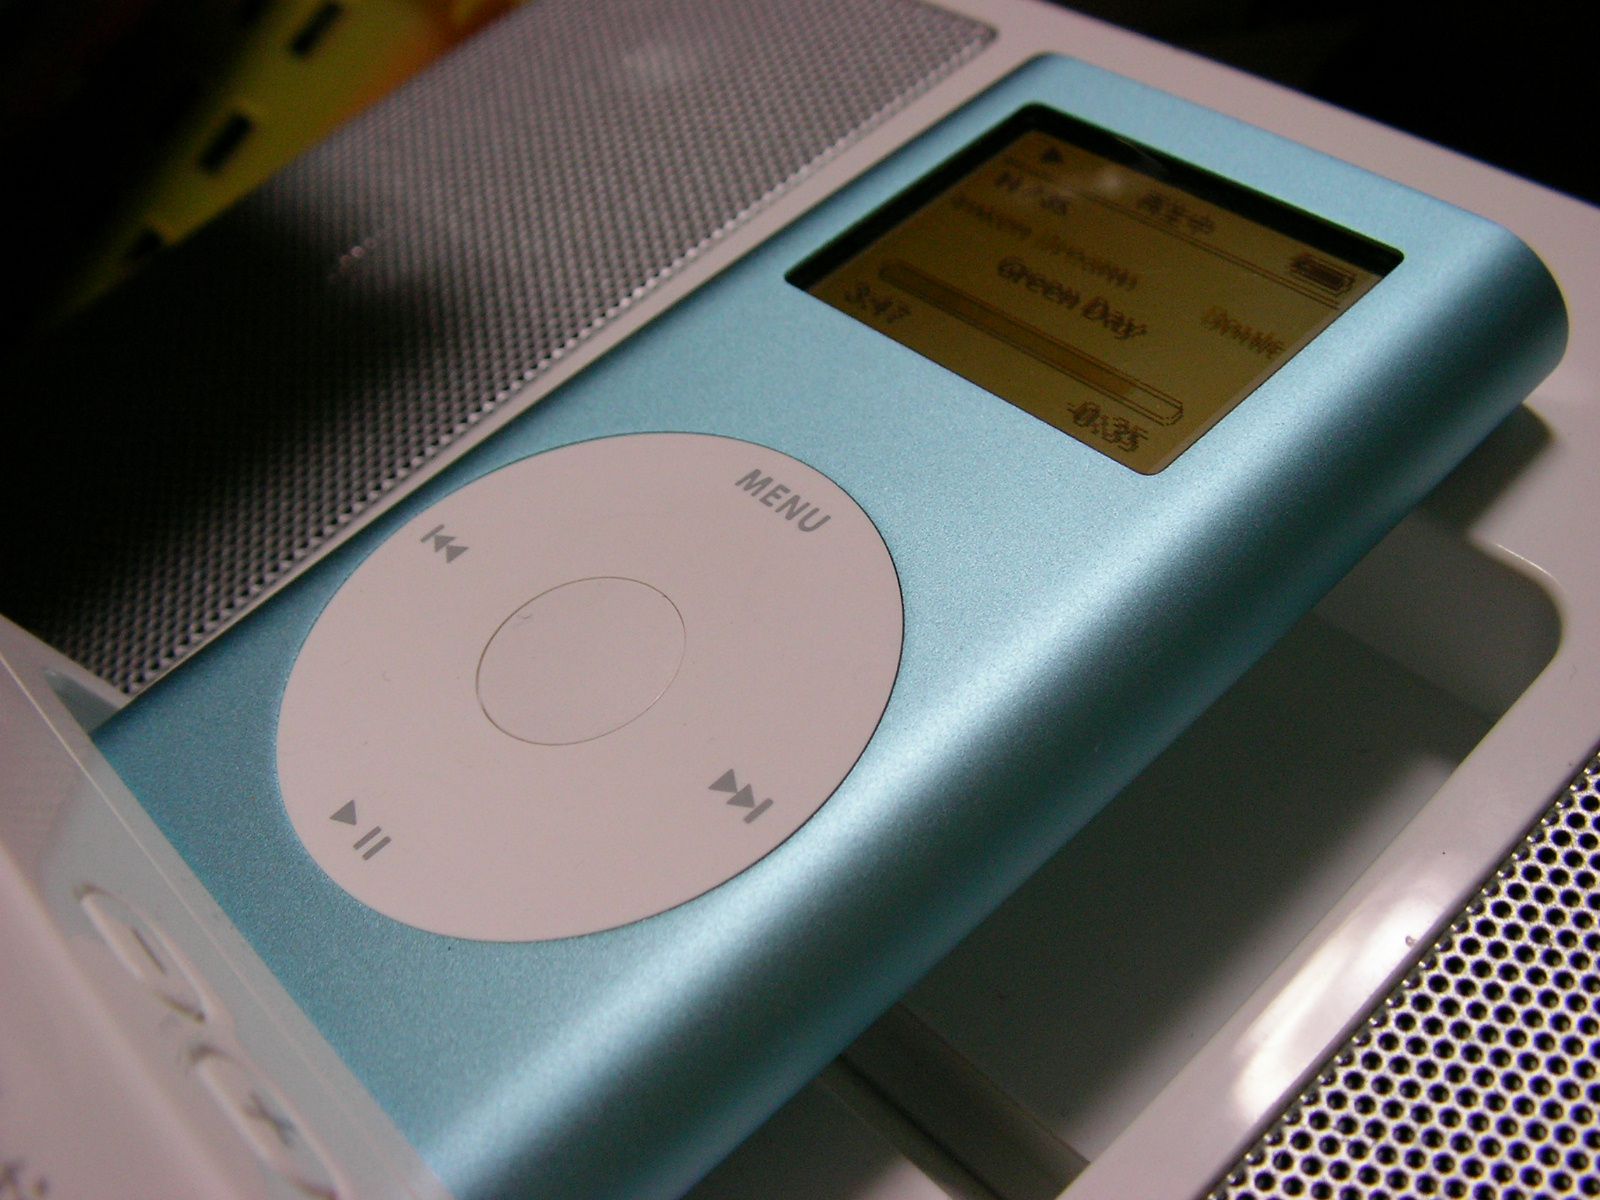 Reset or Restart a frozen iPod Mini in 3 Simple Steps